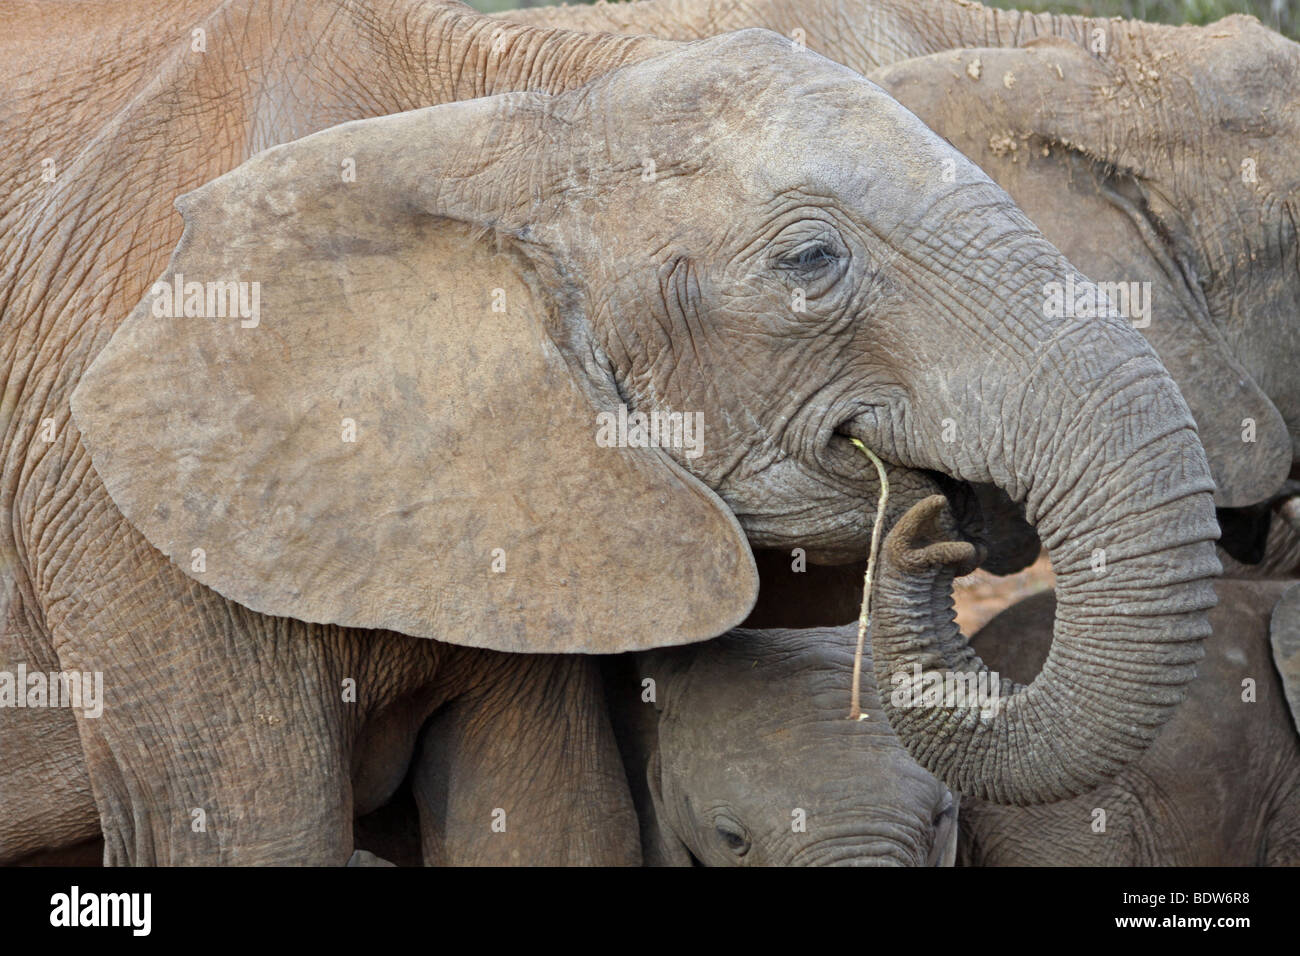 Afrikanischer Elefant Loxodonta Africana Fütterung in Addo National Park, Südafrika Stockfoto